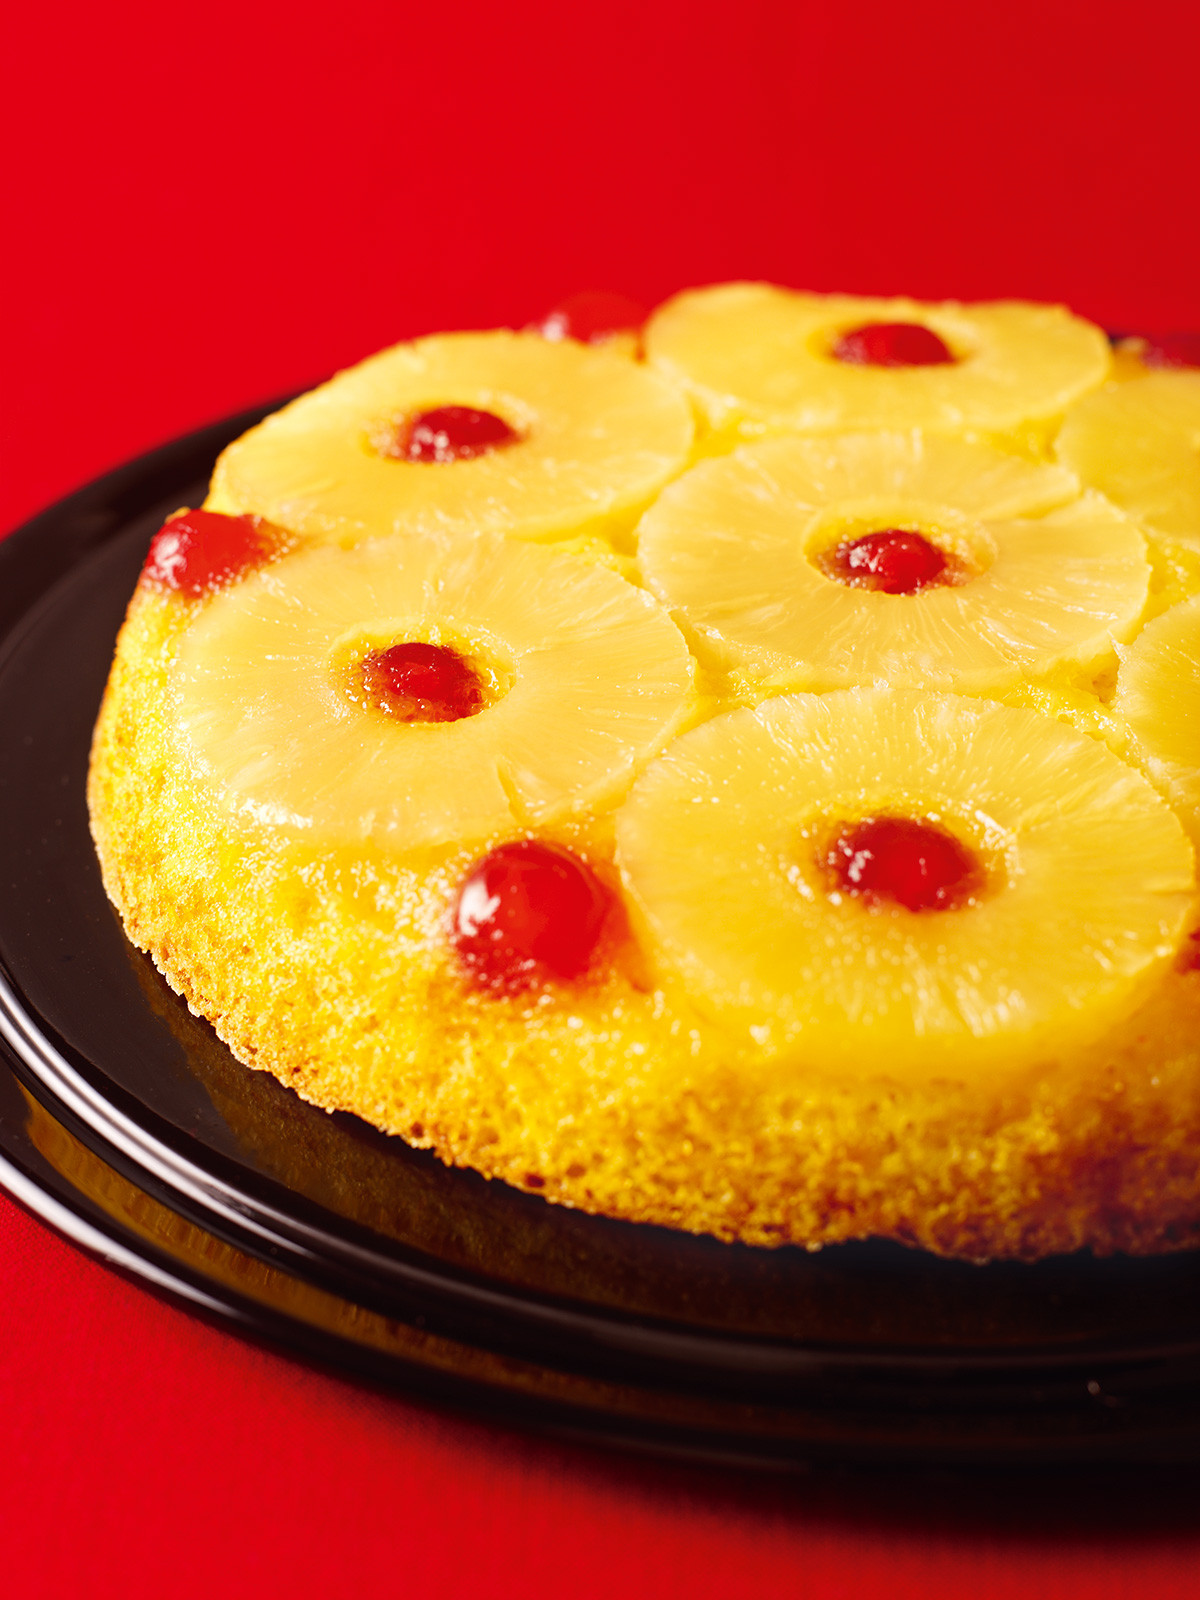 How To Make A Pineapple Upside Down Cake
 Pineapple Upside Down Cake Nigella s Recipes